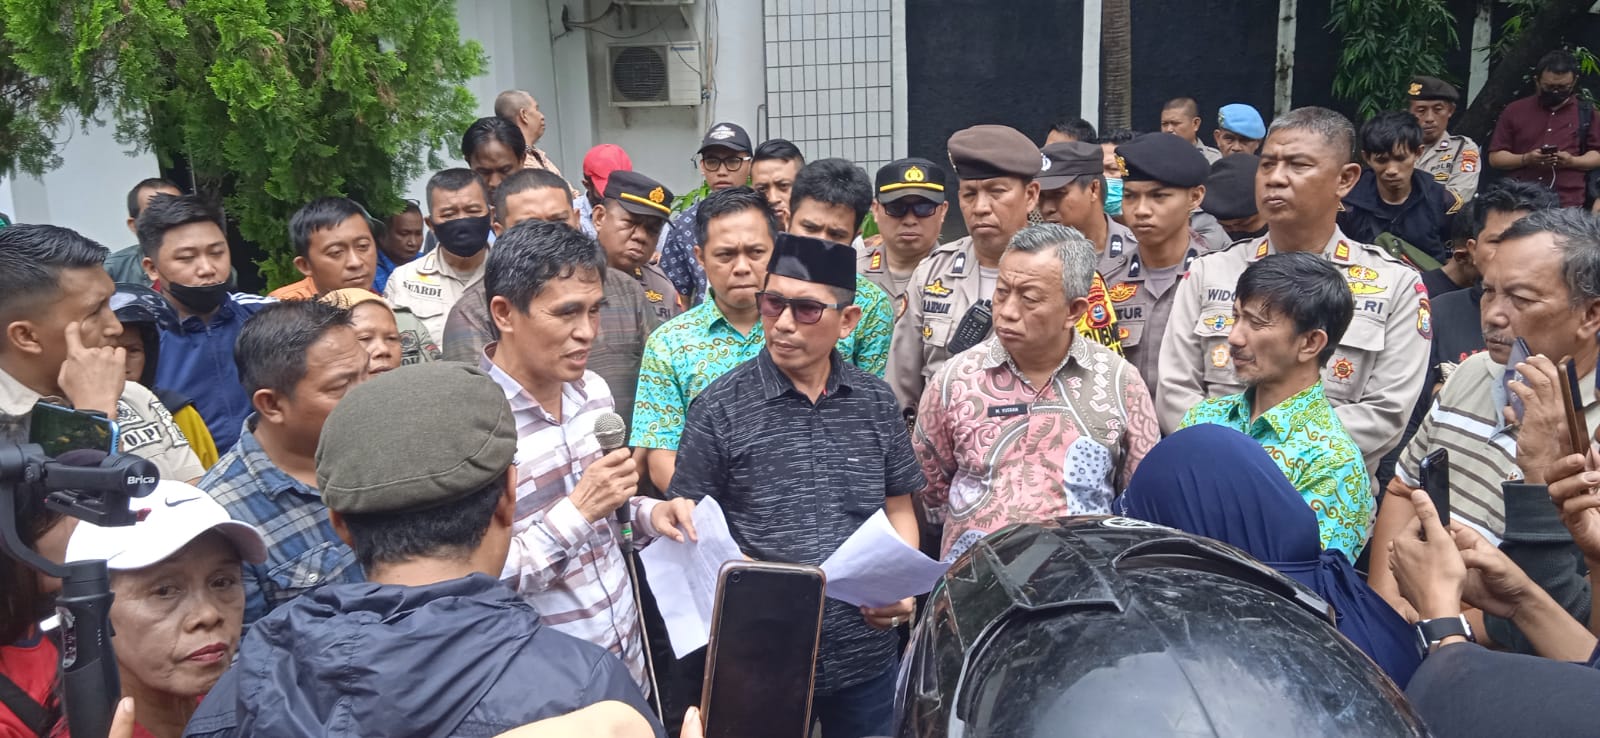 PK5 Losari Tolak Relokasi, DPRD Makassar: Kami Akan Bantu Carikan Solusi